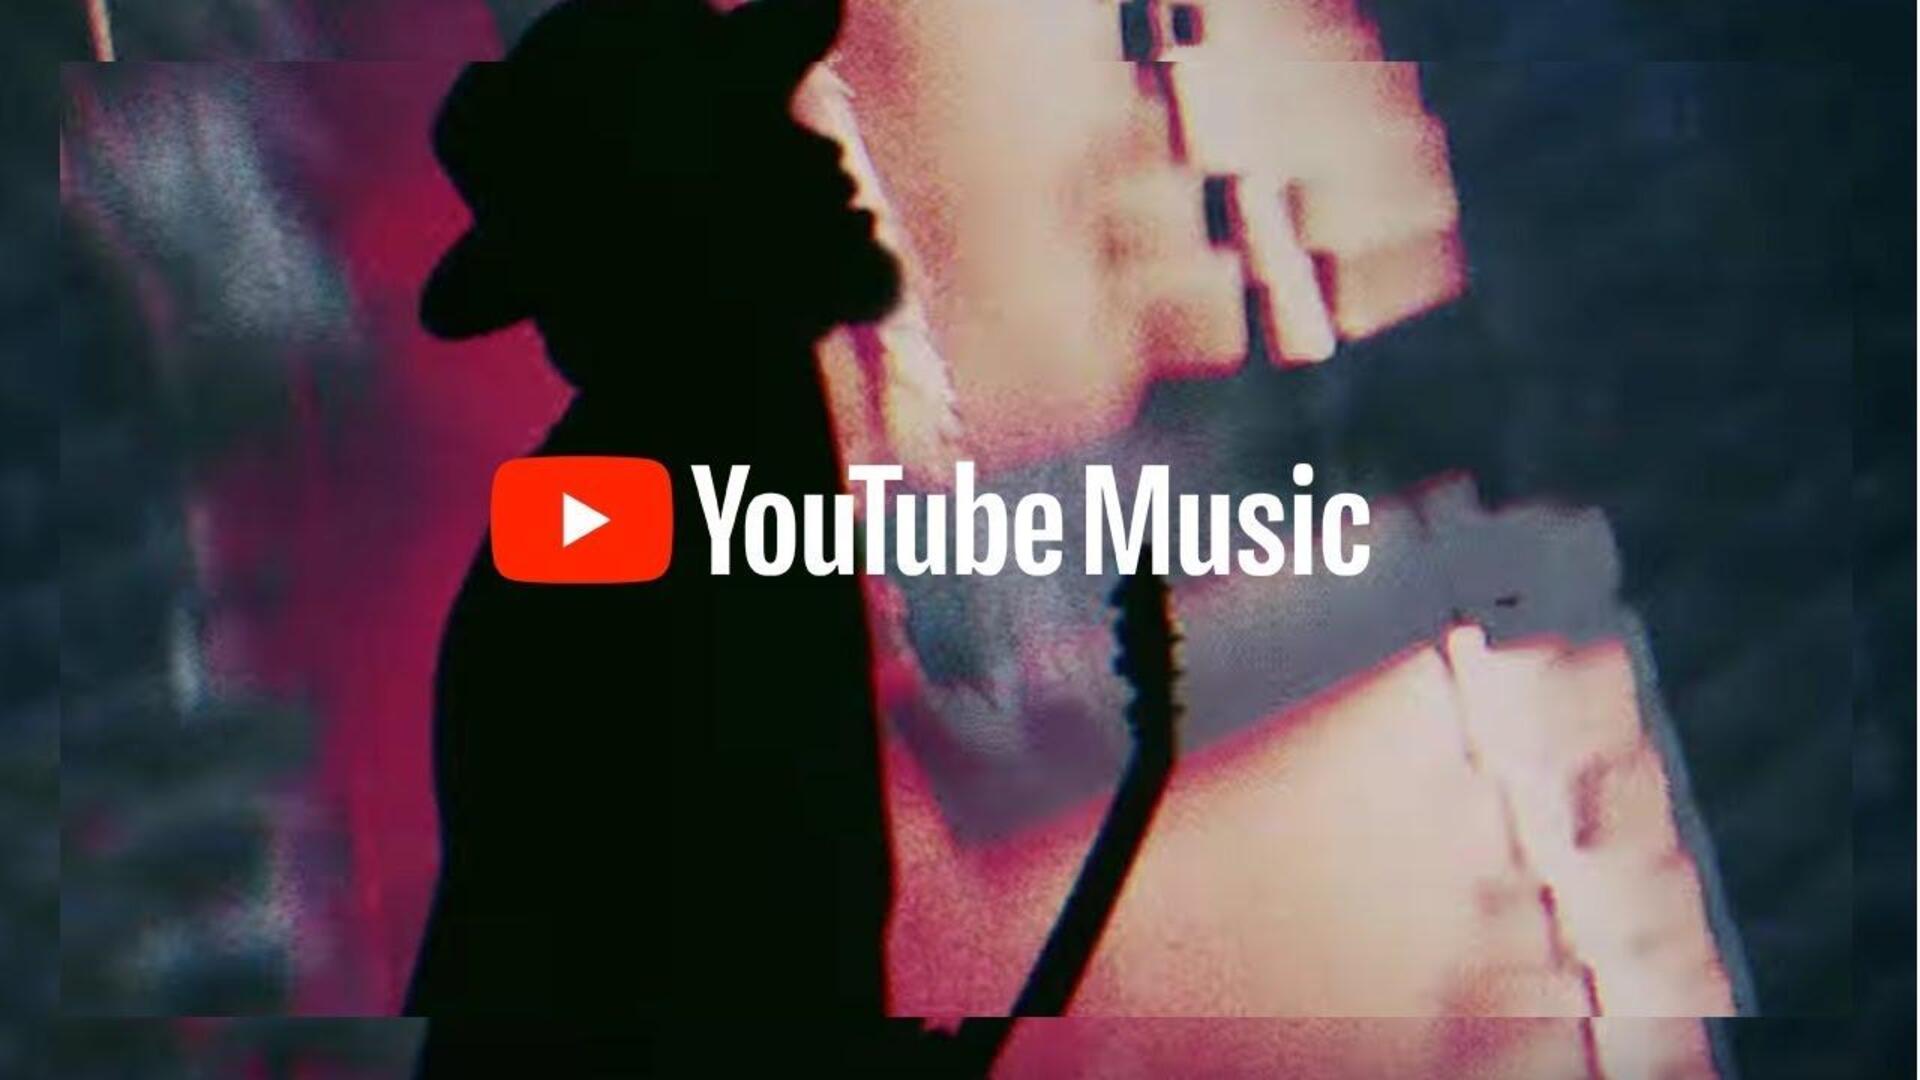 YouTube Music website enables downloading for offline listening 